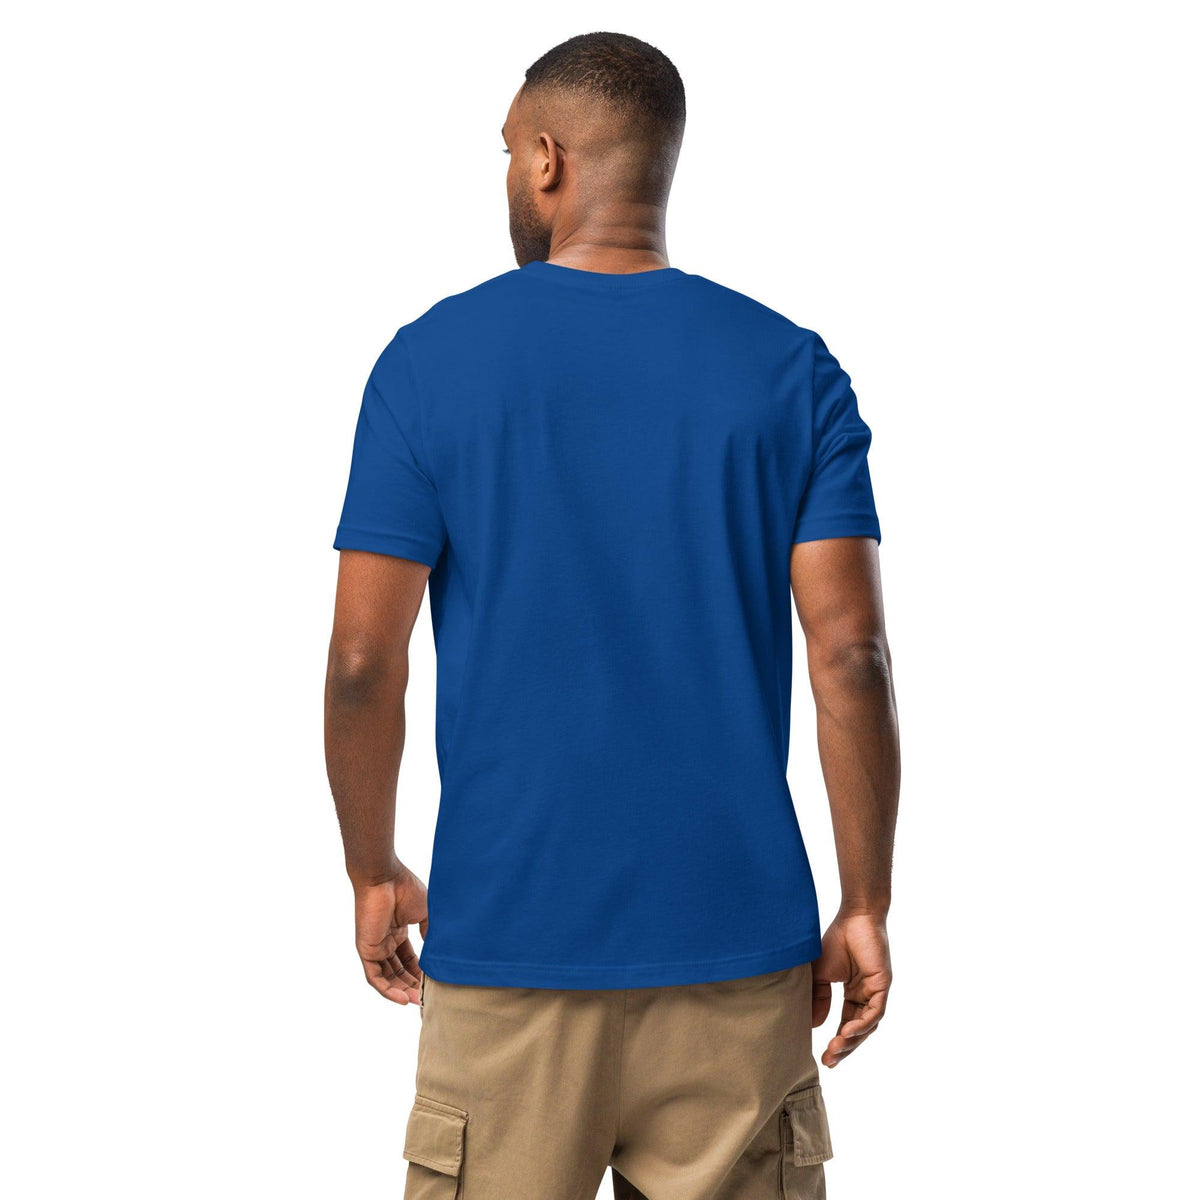 GFIT Logo Ring-Spun Cotton Unisex T-Shirt - True Royal - GFIT SPORTS